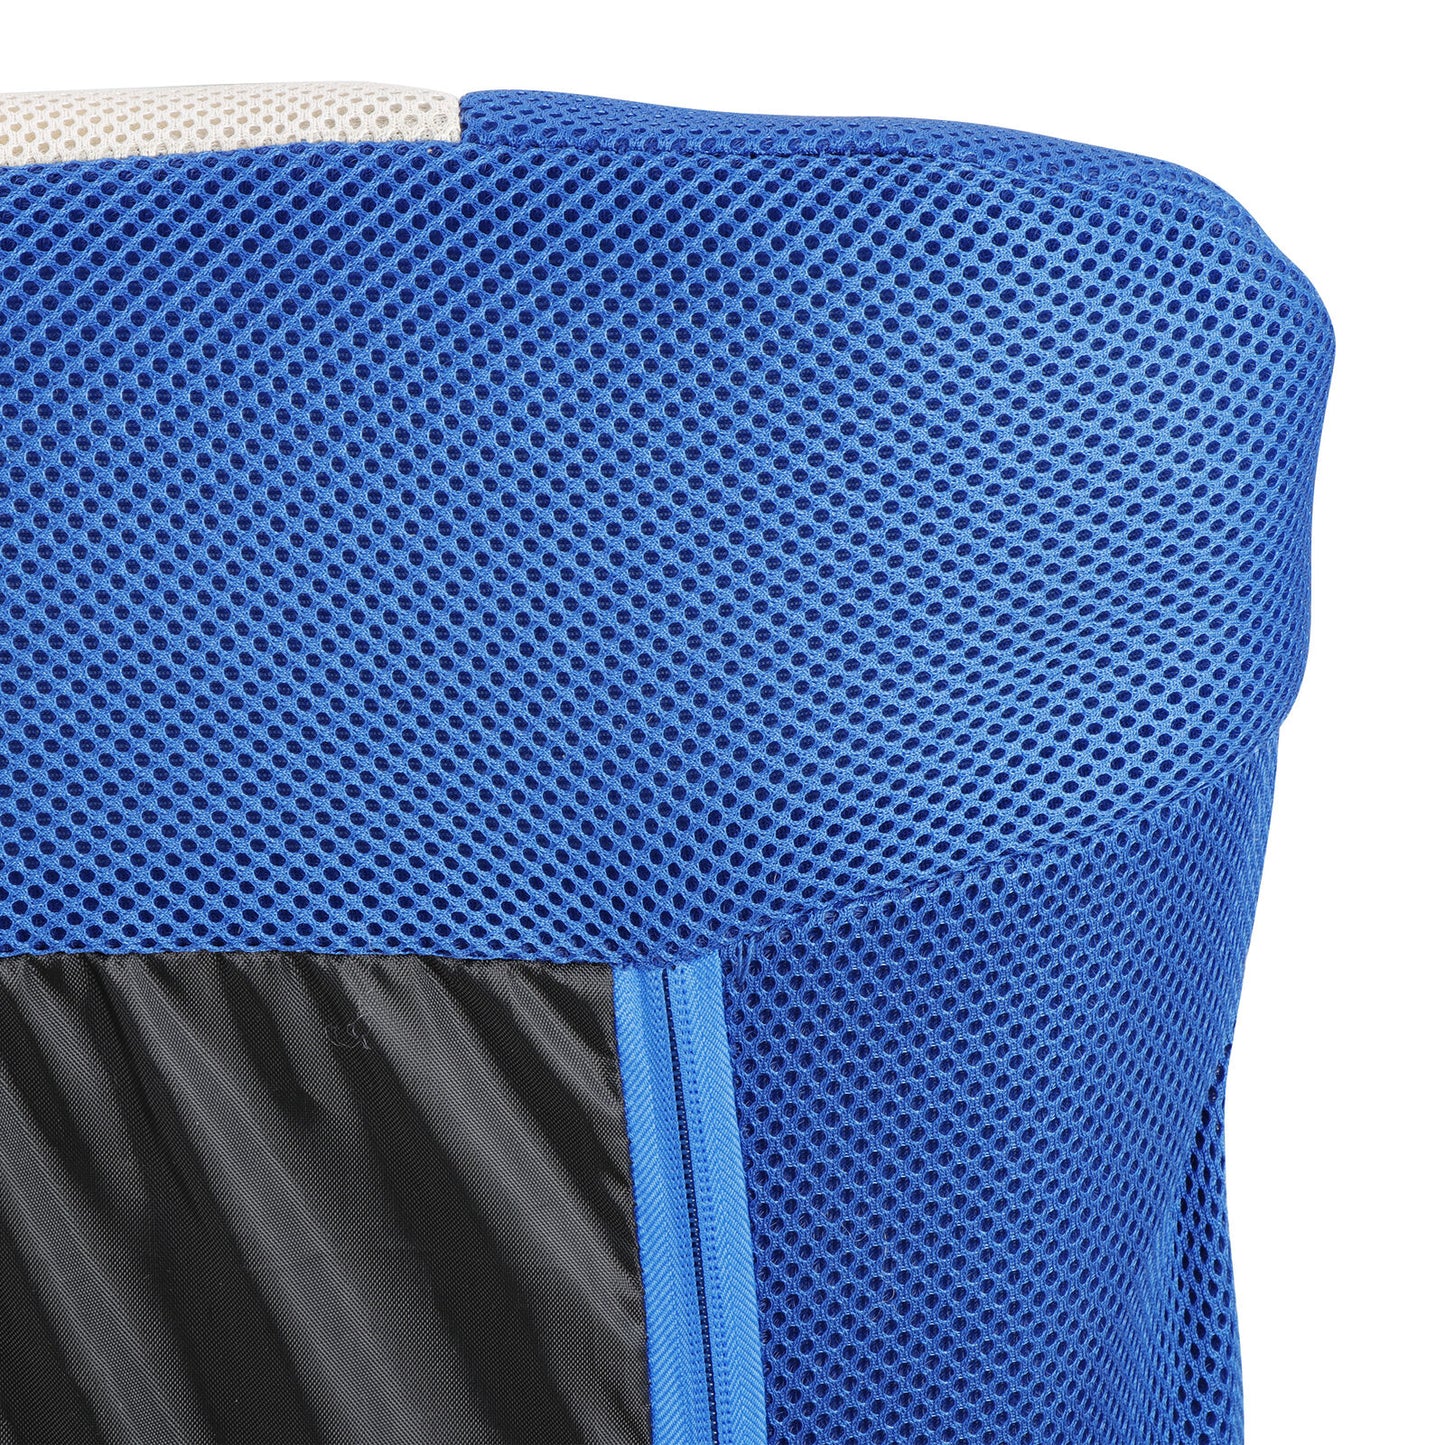 360 Degree Swivel Gaming Floor Chair w/Armrest Handles Foldable Adjustable Back